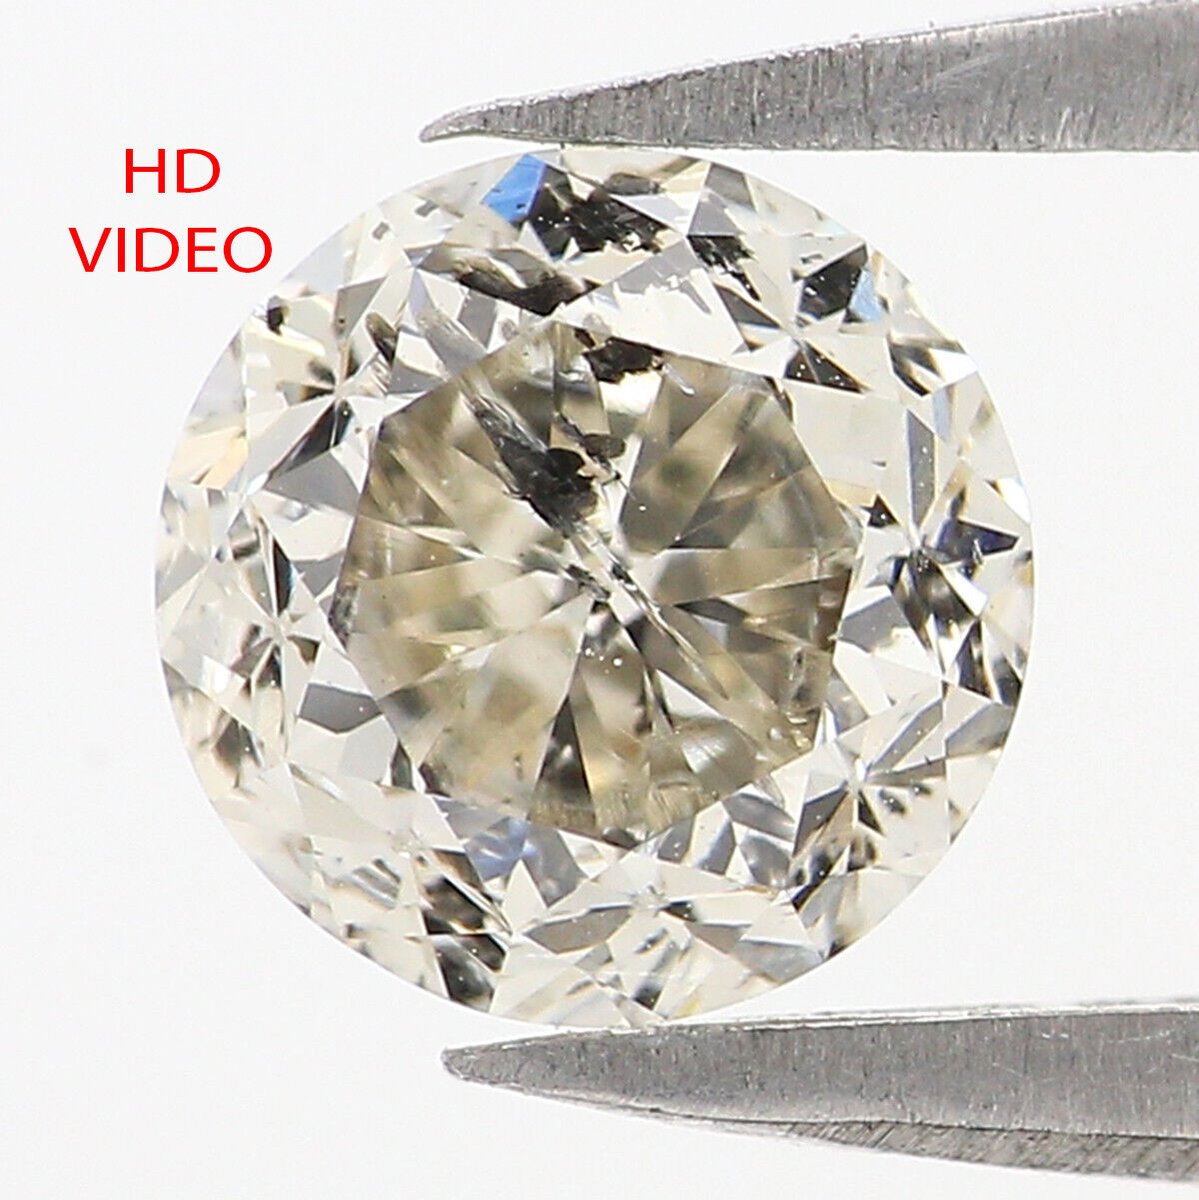 1.25 Ct Natural Loose Round Shape Diamond White - H Color Round Diamond 6.45 MM Natural Loose Diamond Round Brilliant Cut Diamond QL2646

ETSY : etsy.com/listing/699381…

#NaturalLooseRoundDiamond #WhiteHDiamond #RoundBrilliantCutDiamond #DiamondLove #FineJewelry #LuxuryJewelry